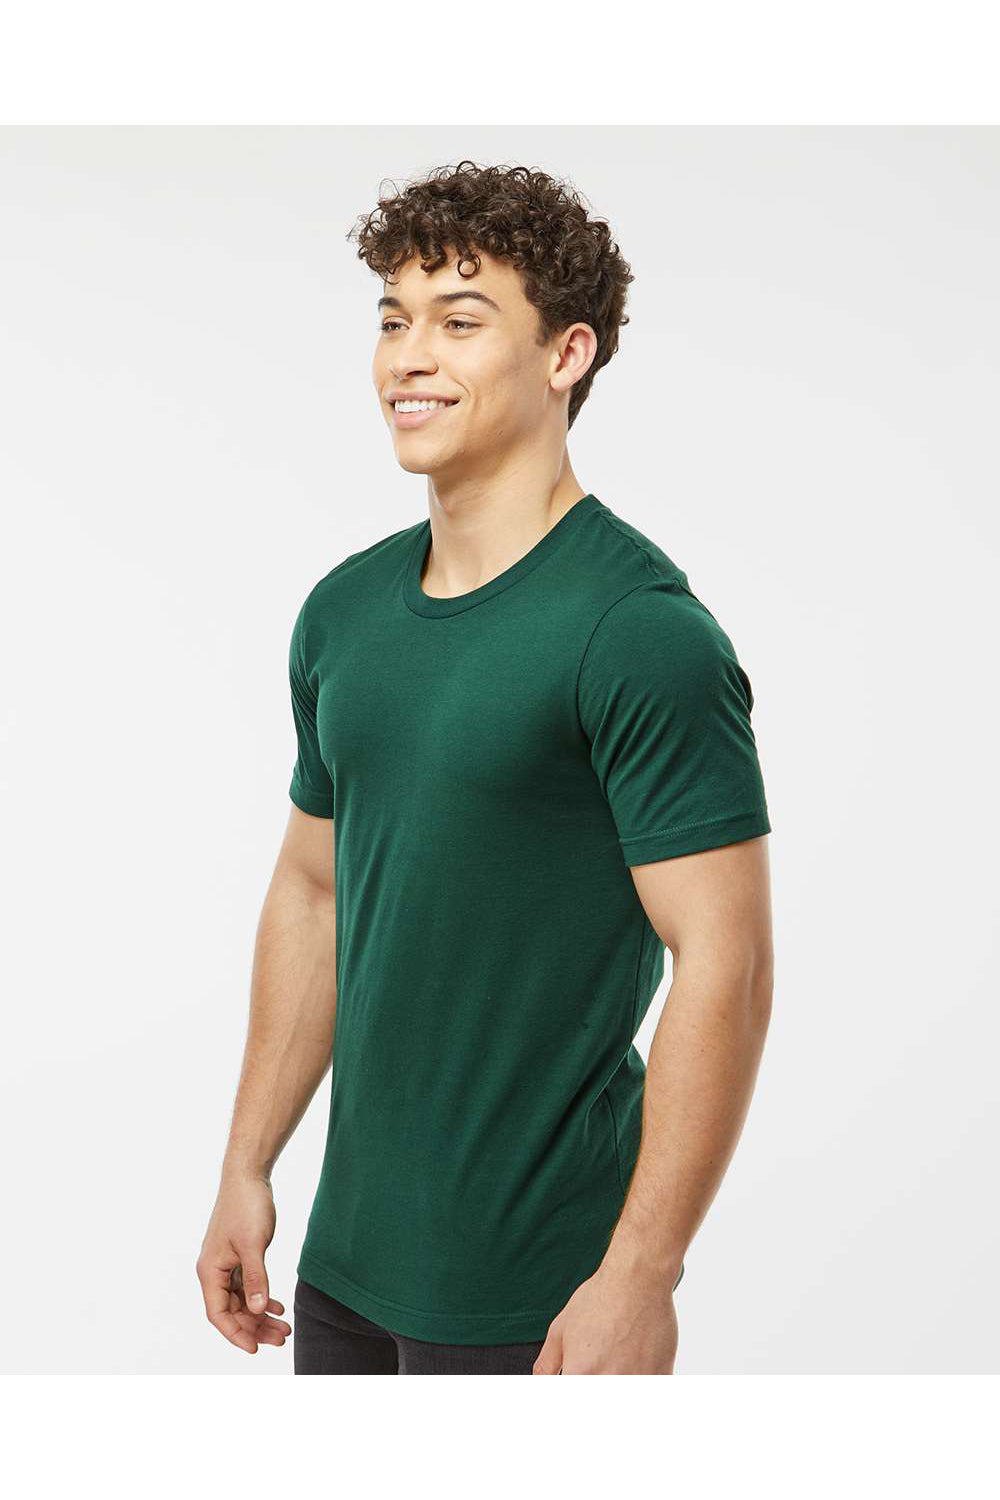 Tultex 502 Mens Premium Short Sleeve Crewneck T-Shirt Forest Green Model Side